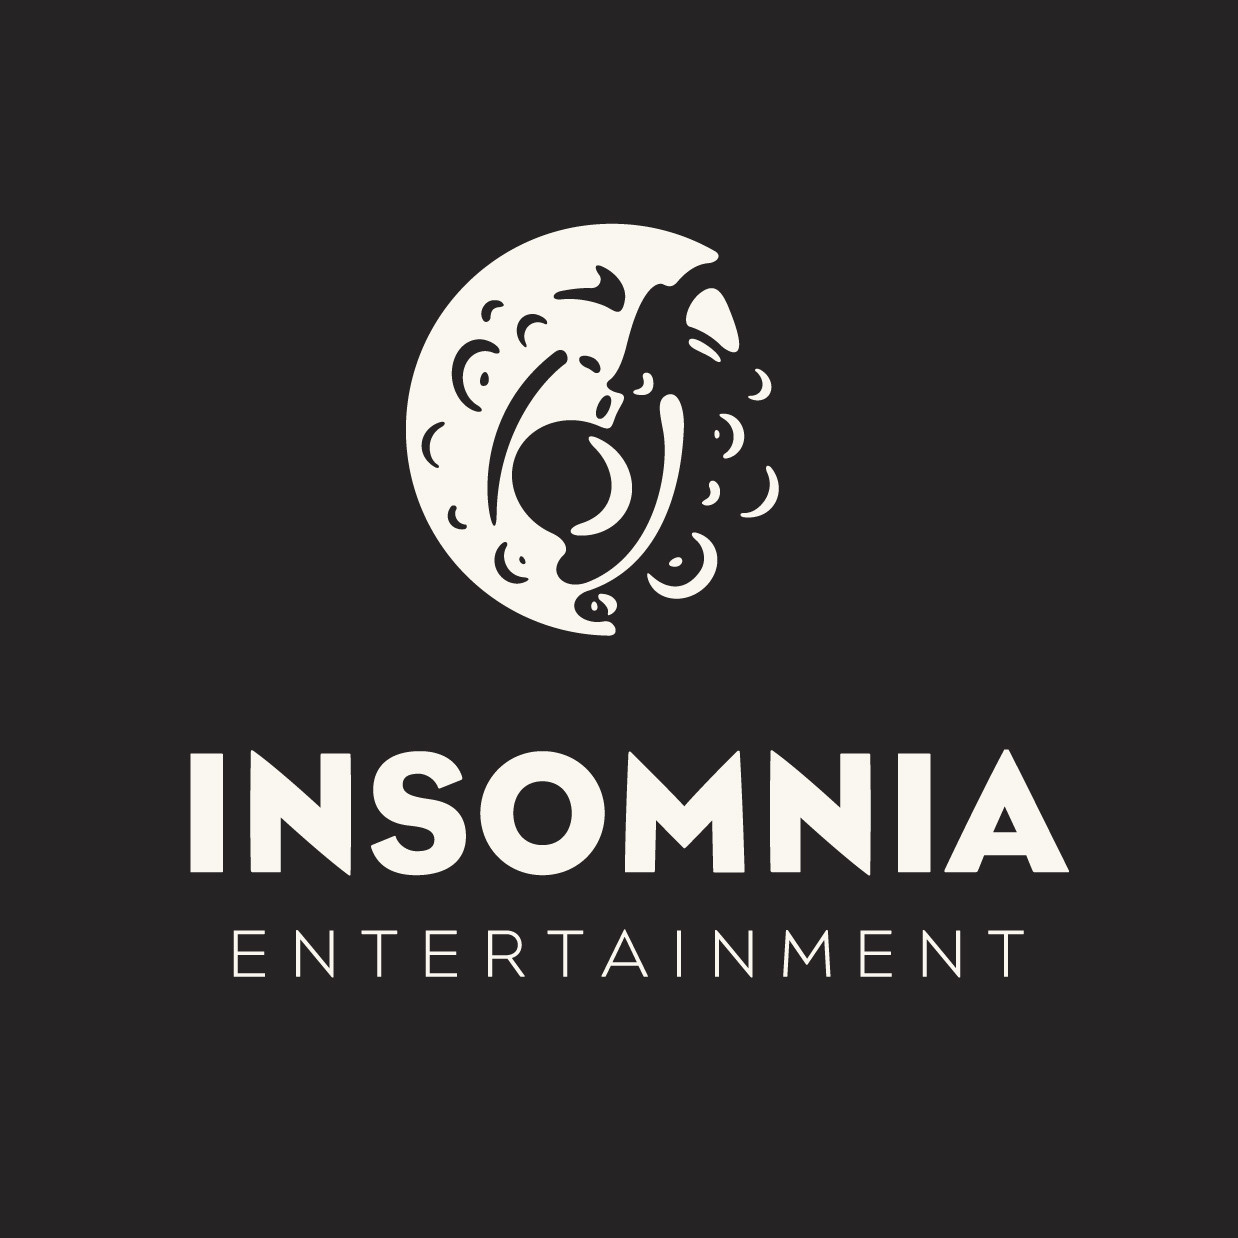 Dfm insomnia. Луна логотип. Инсомния логотип. Insomnia фестиваль лого. Лунный логотип.